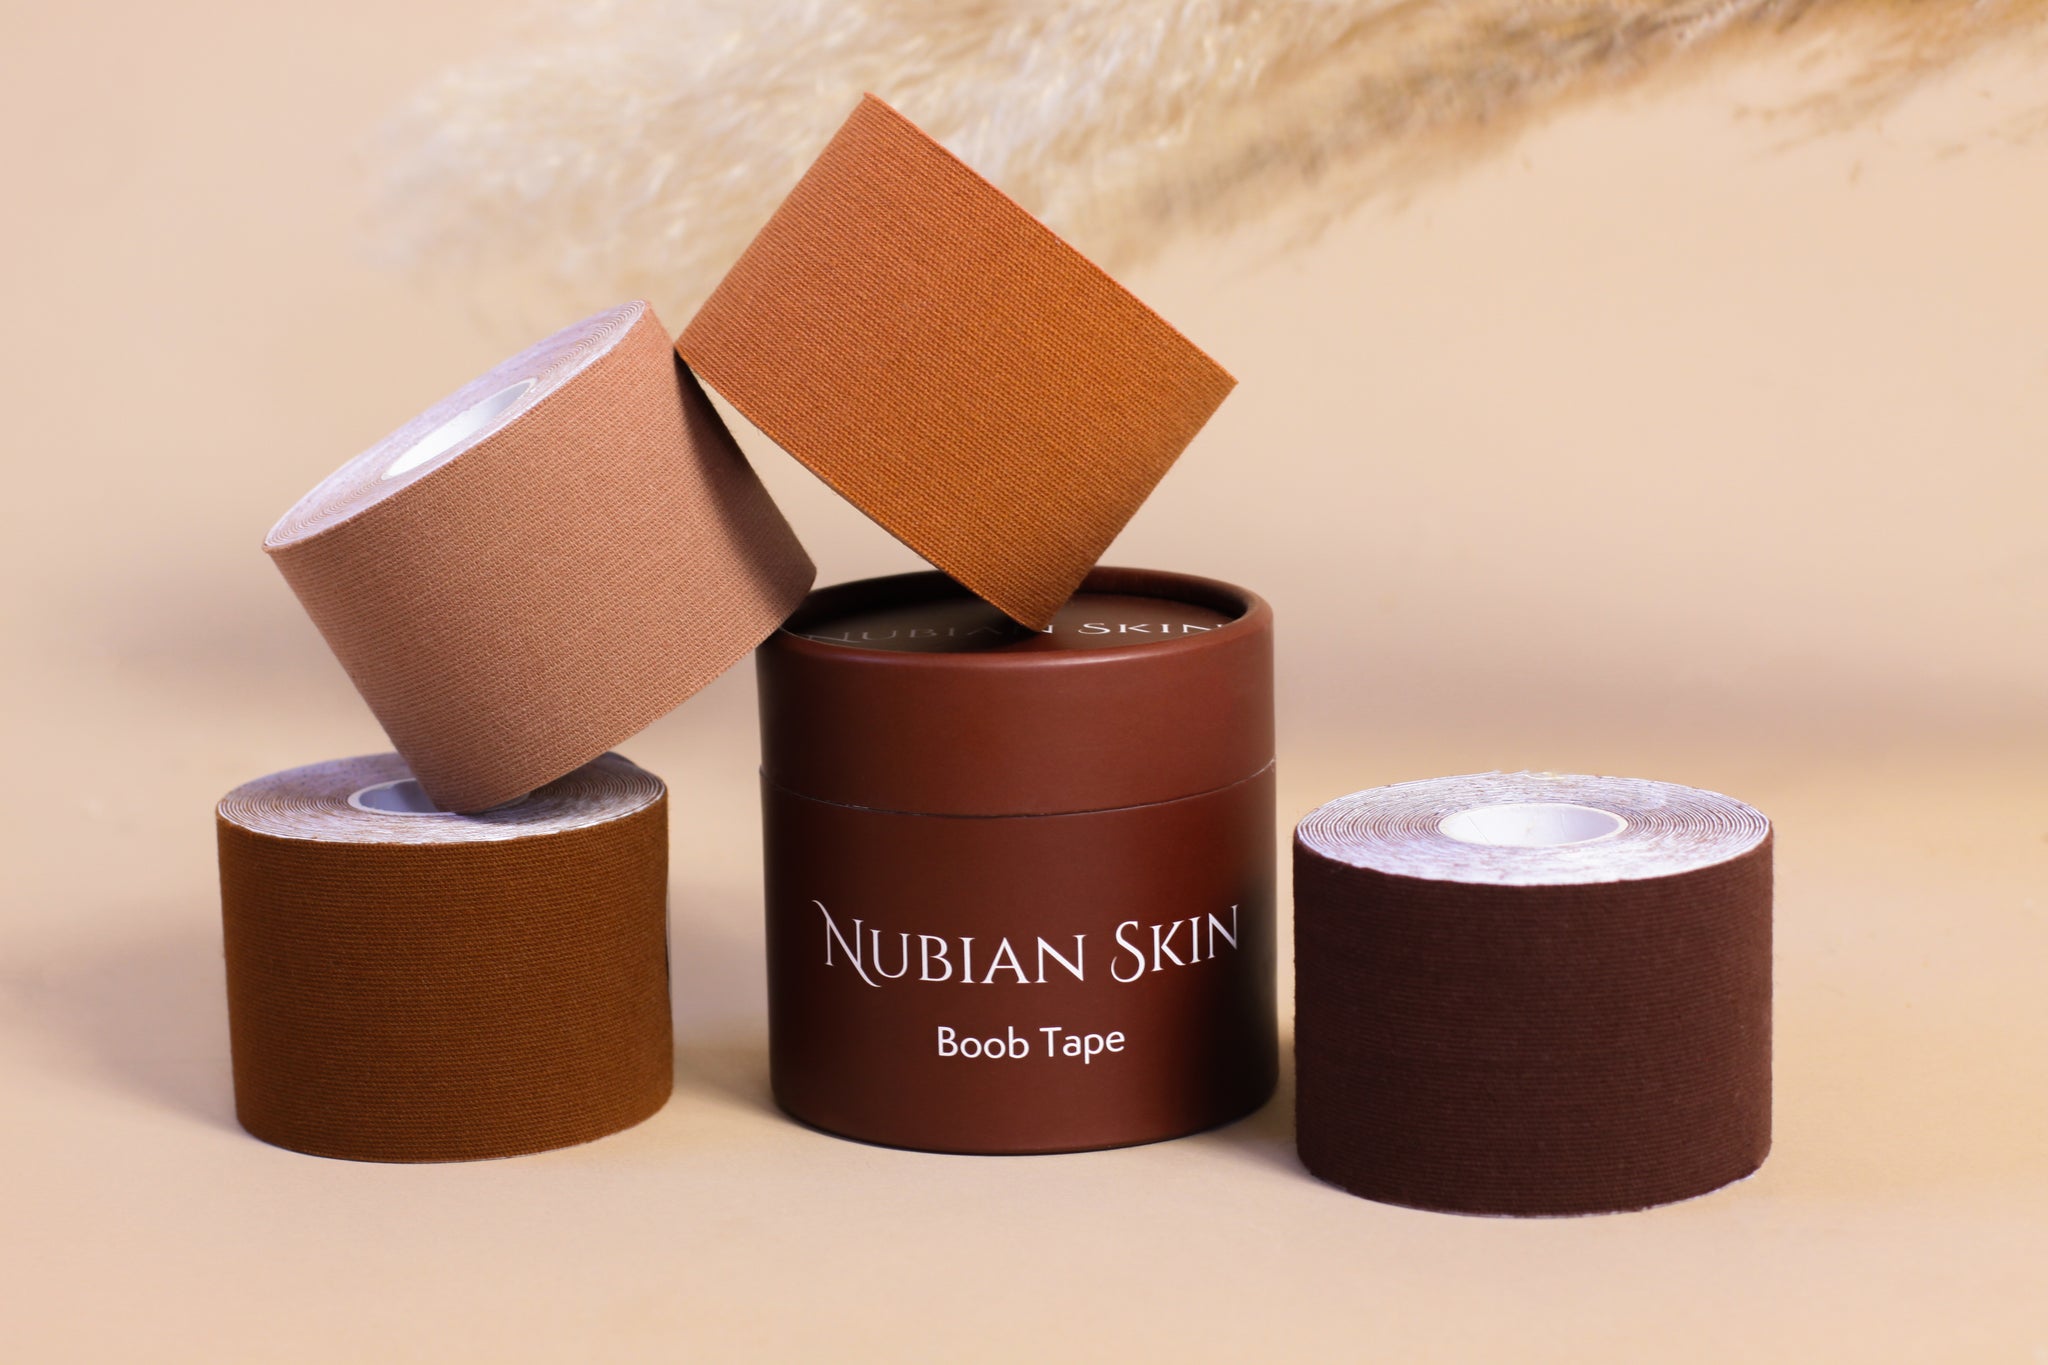 Nubian Skin boob tape